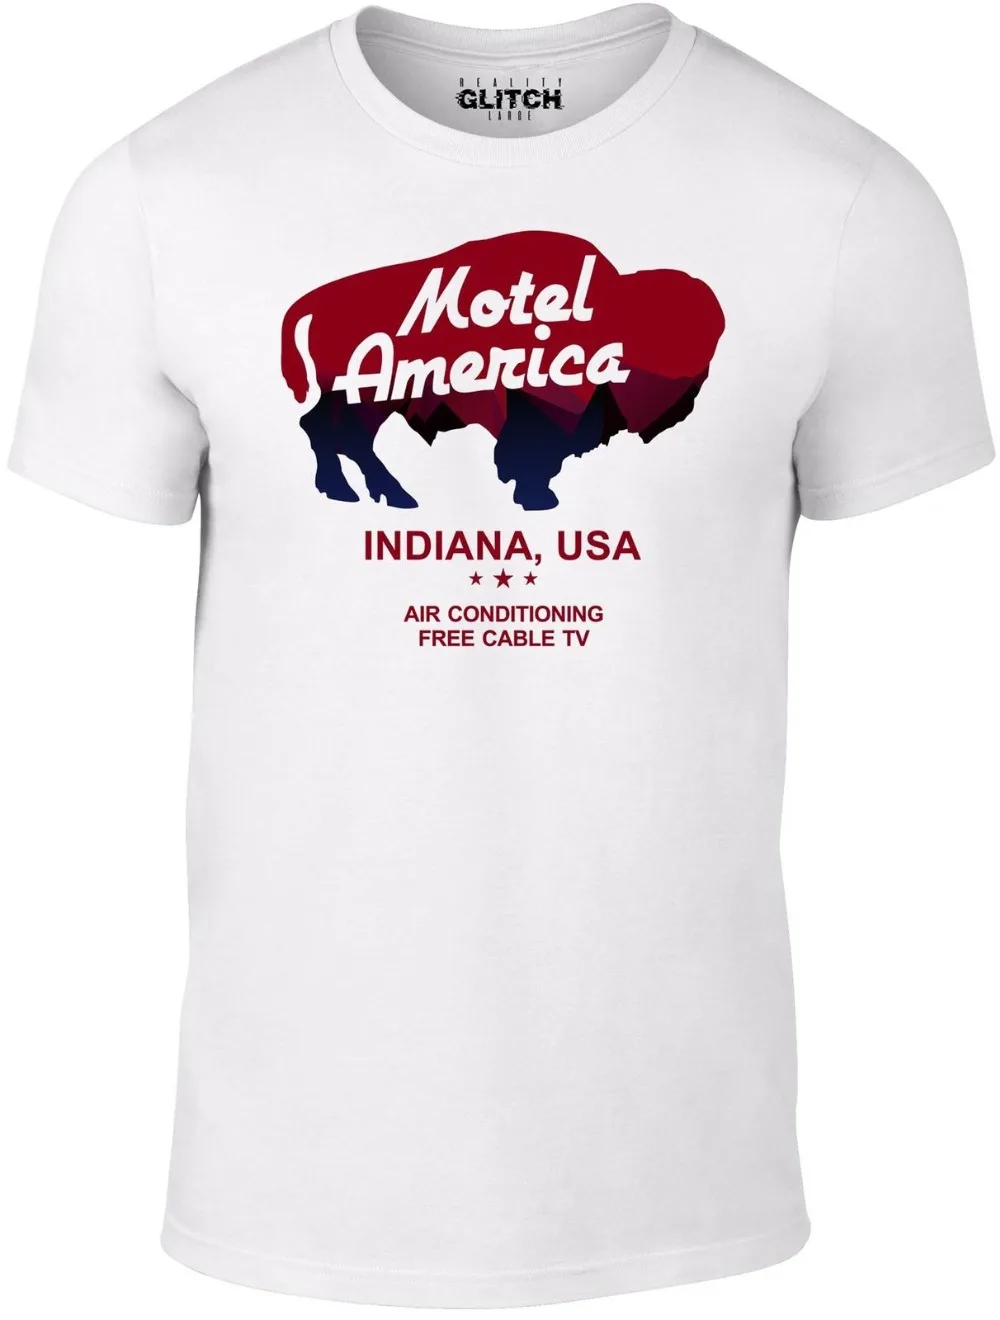 

Motel America T-Shirt - Inspired By American Gods Tv Series Mr Wednesday Indiana 2019 Men Hip Hop Casual Tee Shirt Men Designer